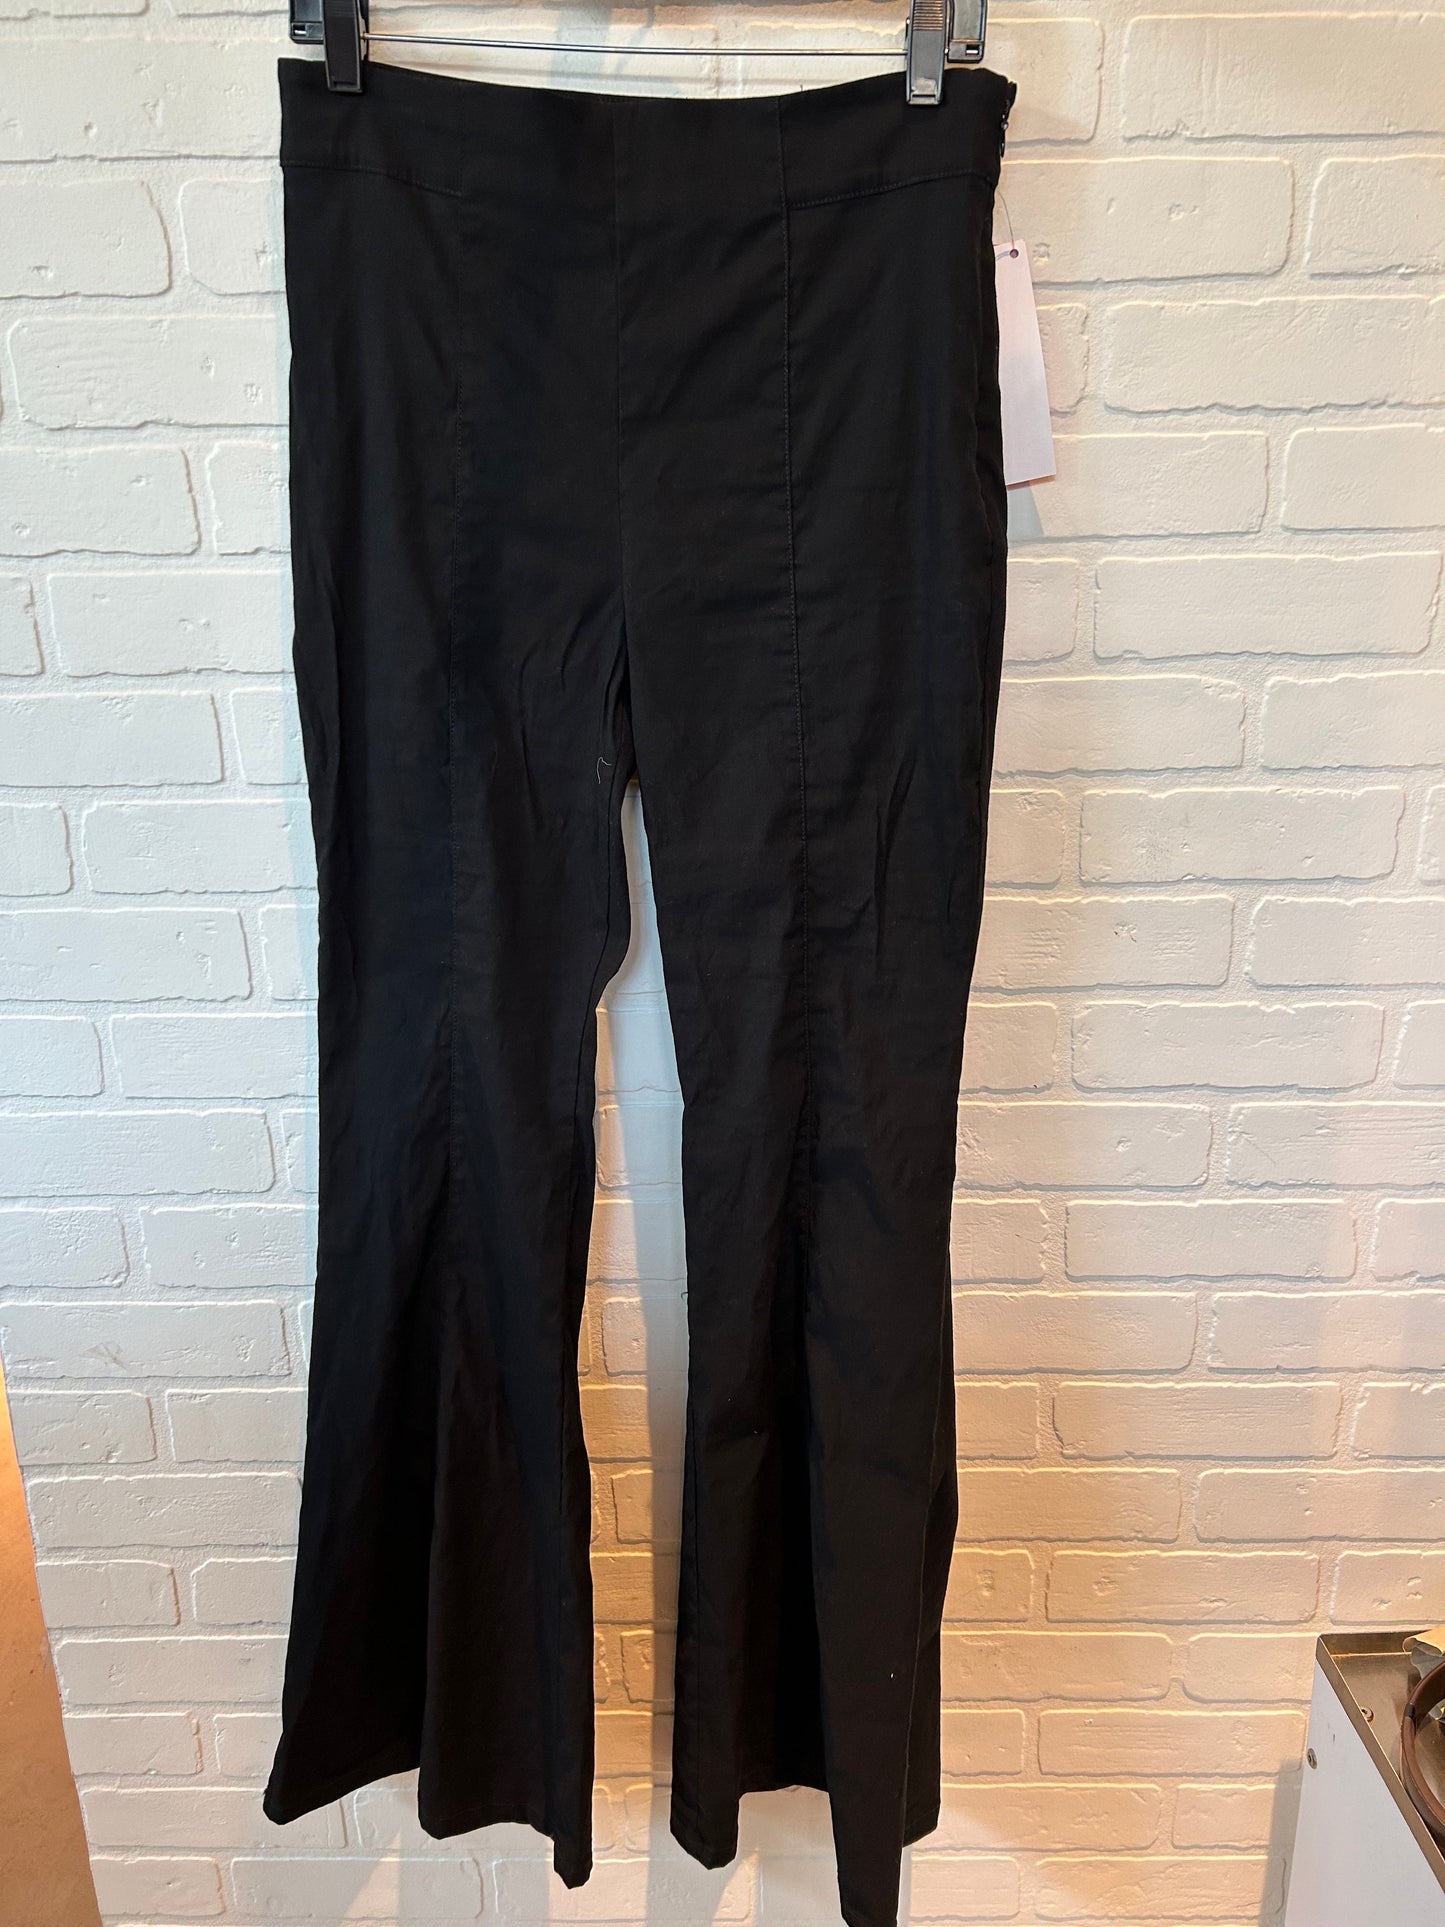 Black Pants Other Maeve, Size 8